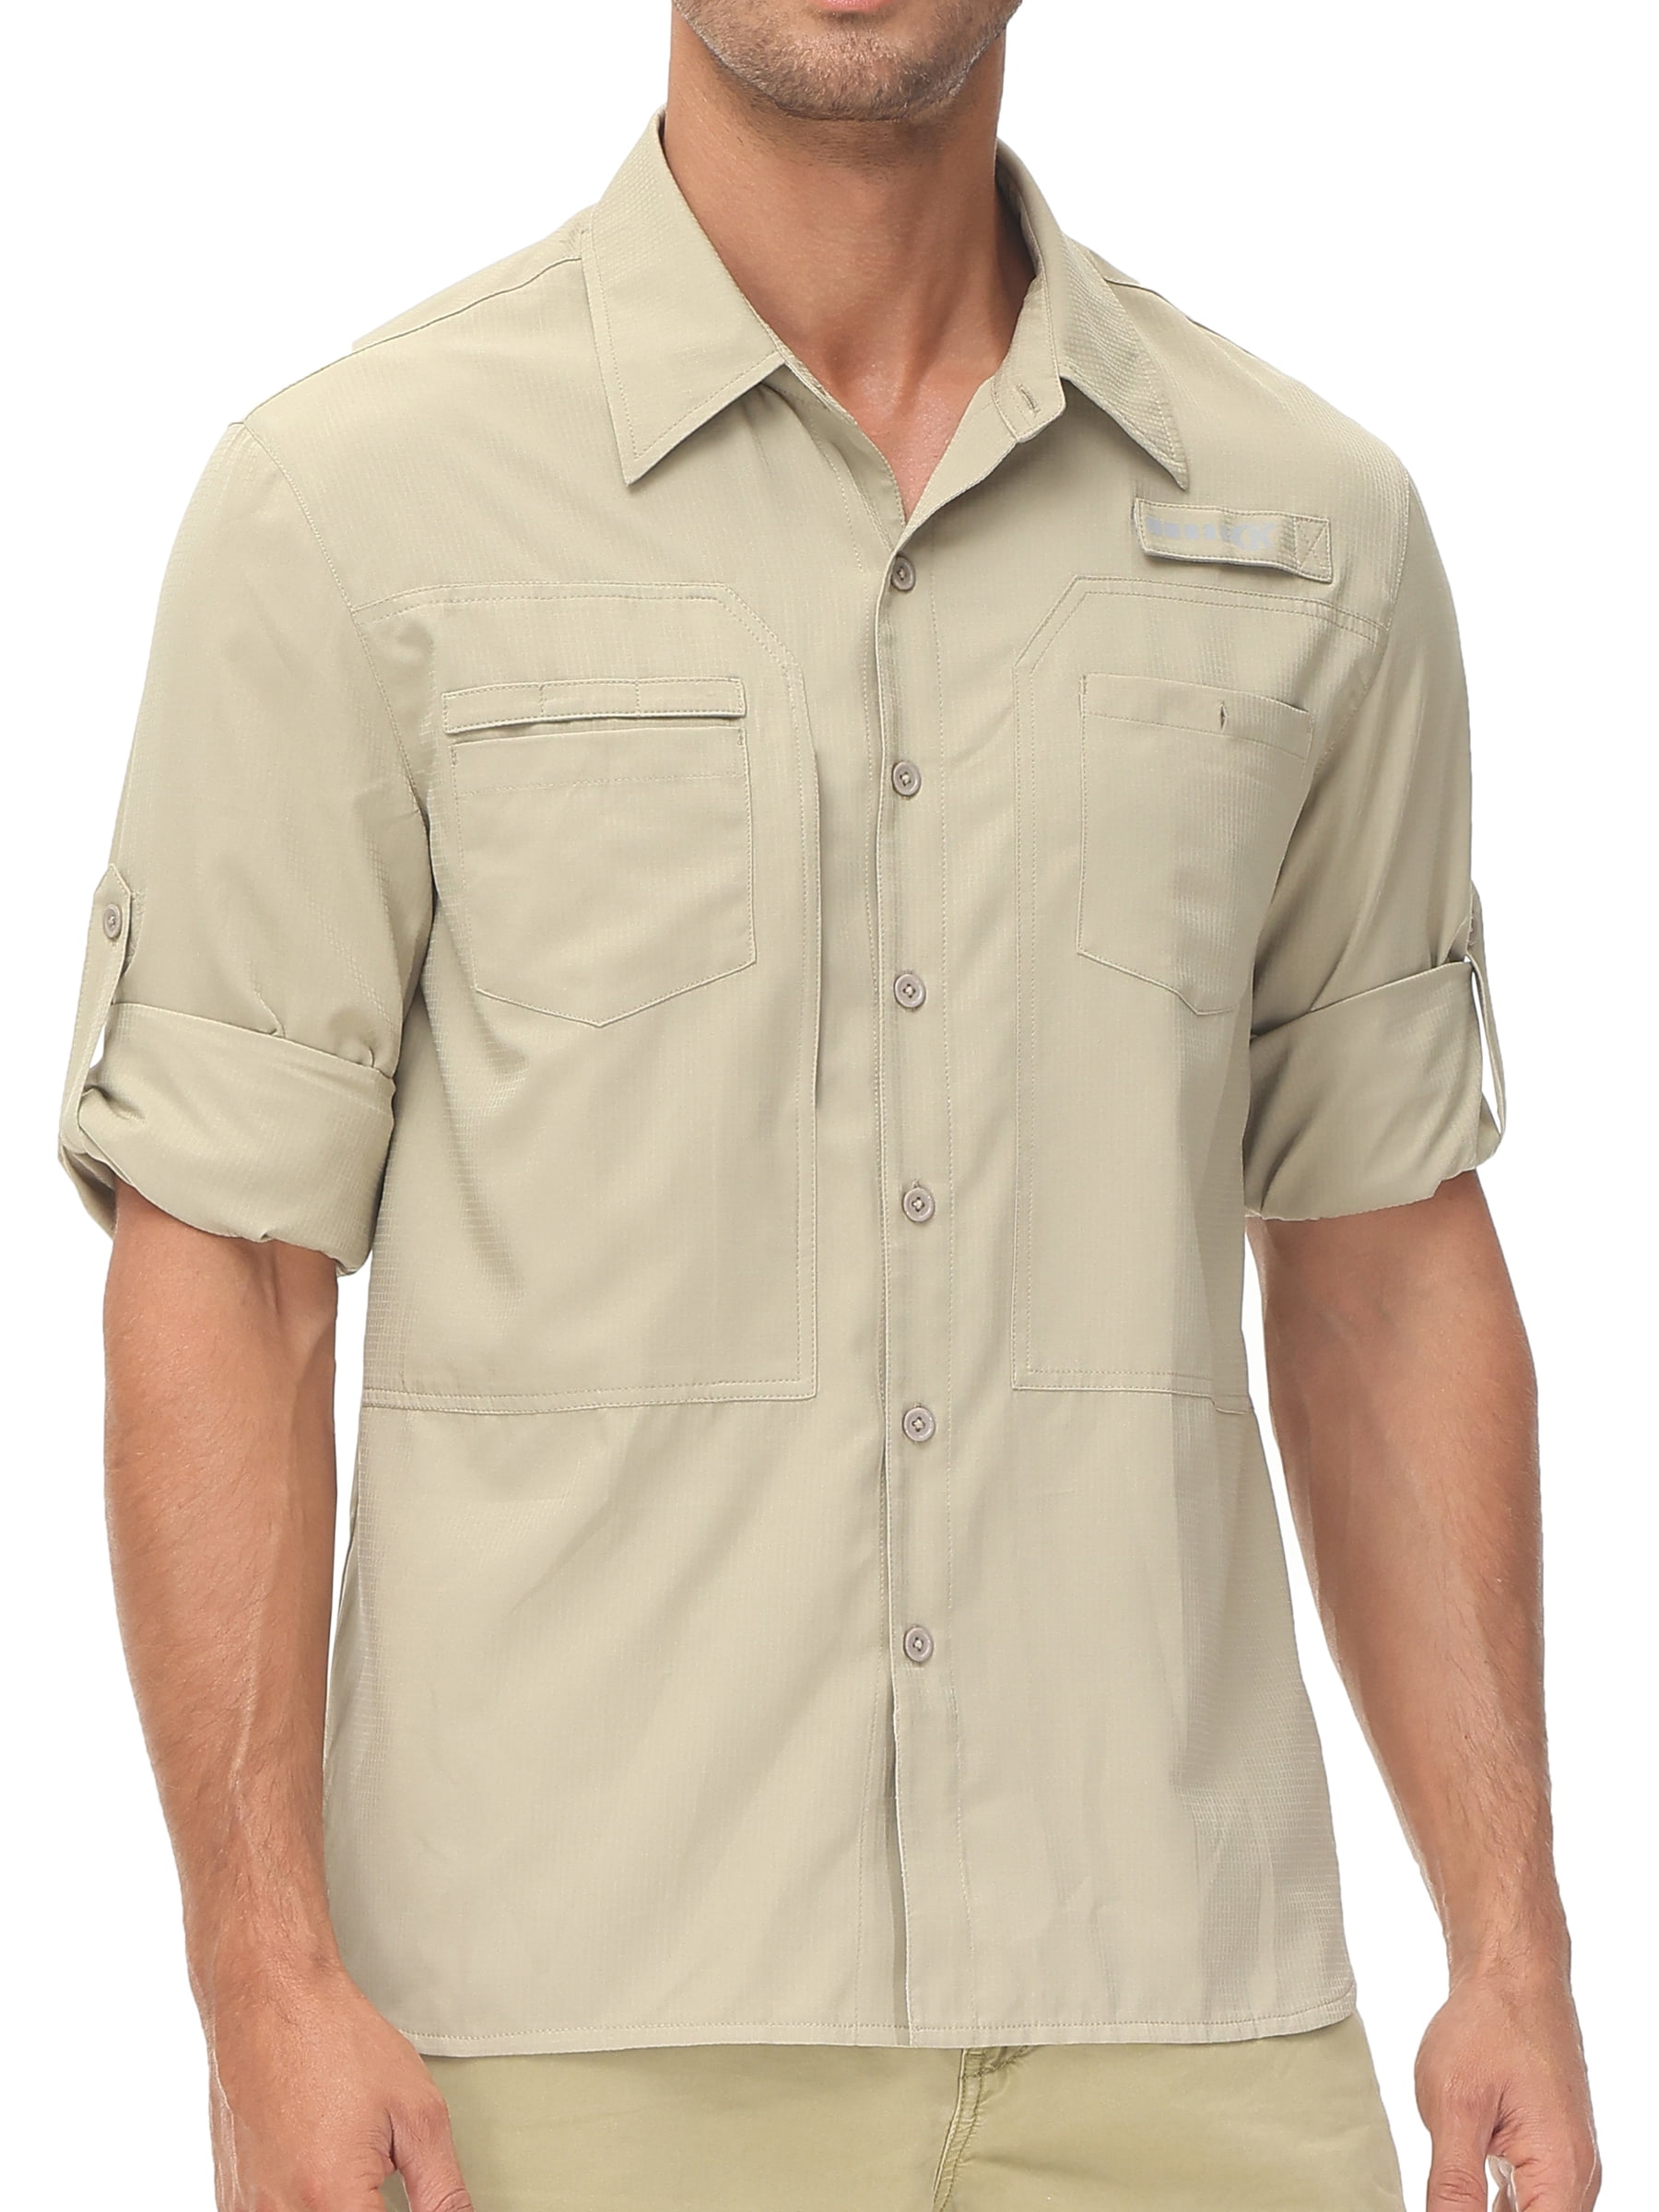 adviicd Men's Sport Western Basic Two Pocket Long Sleeve Snap Shirt Fishing  Shirts for Men 